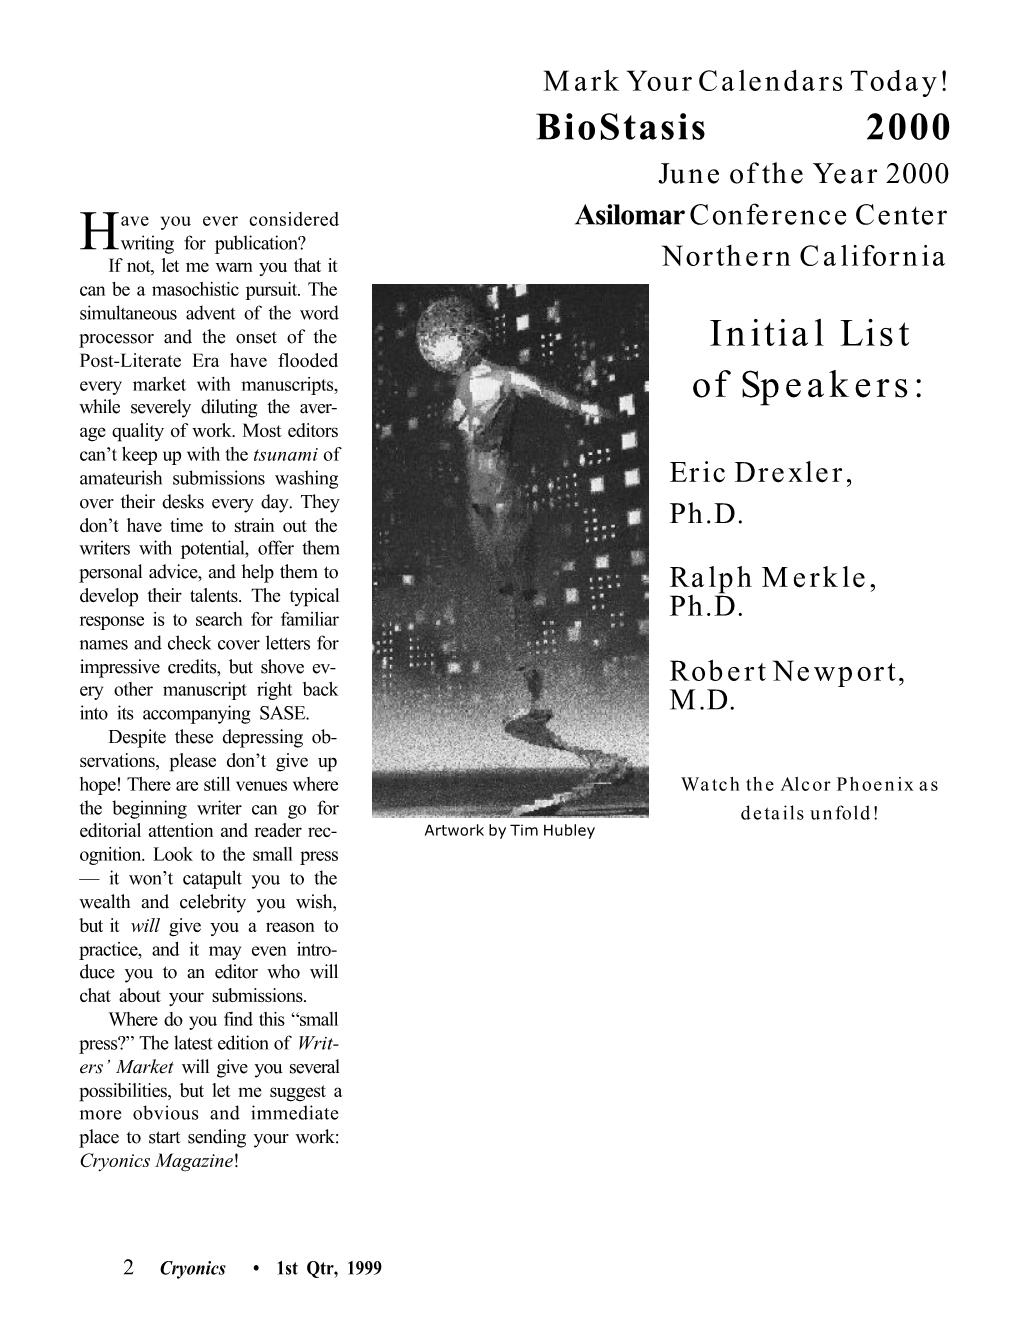 Cryonics Magazine, Q1 1999